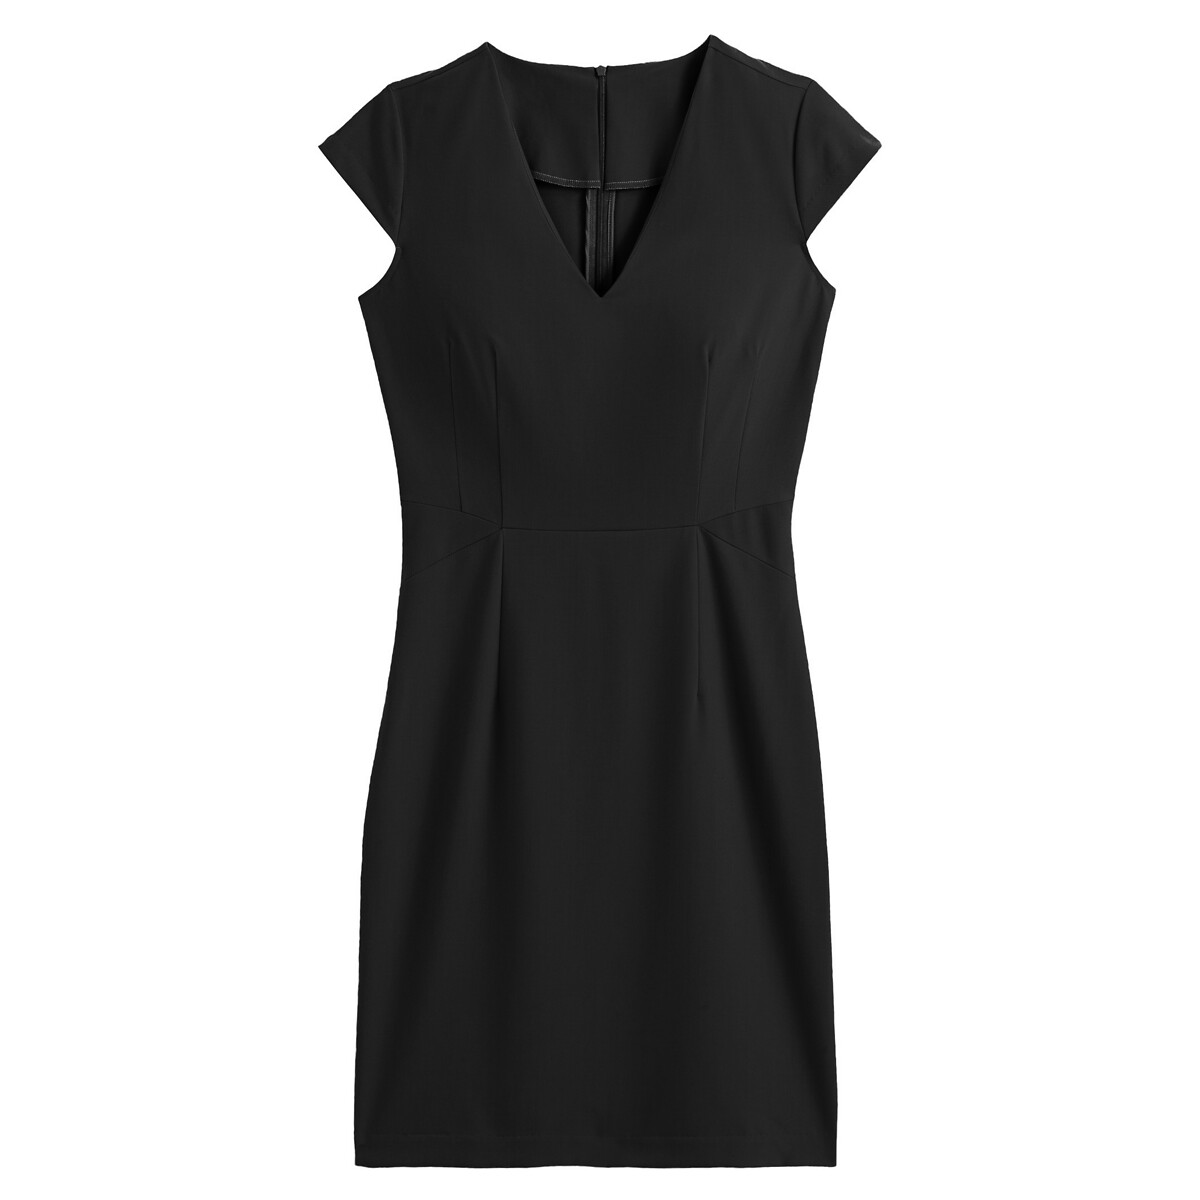 Платье LaRedoute Без рукавов в форме футляра 38 (FR) - 44 (RUS) черный, размер 38 (FR) - 44 (RUS) Без рукавов в форме футляра 38 (FR) - 44 (RUS) черный - фото 5